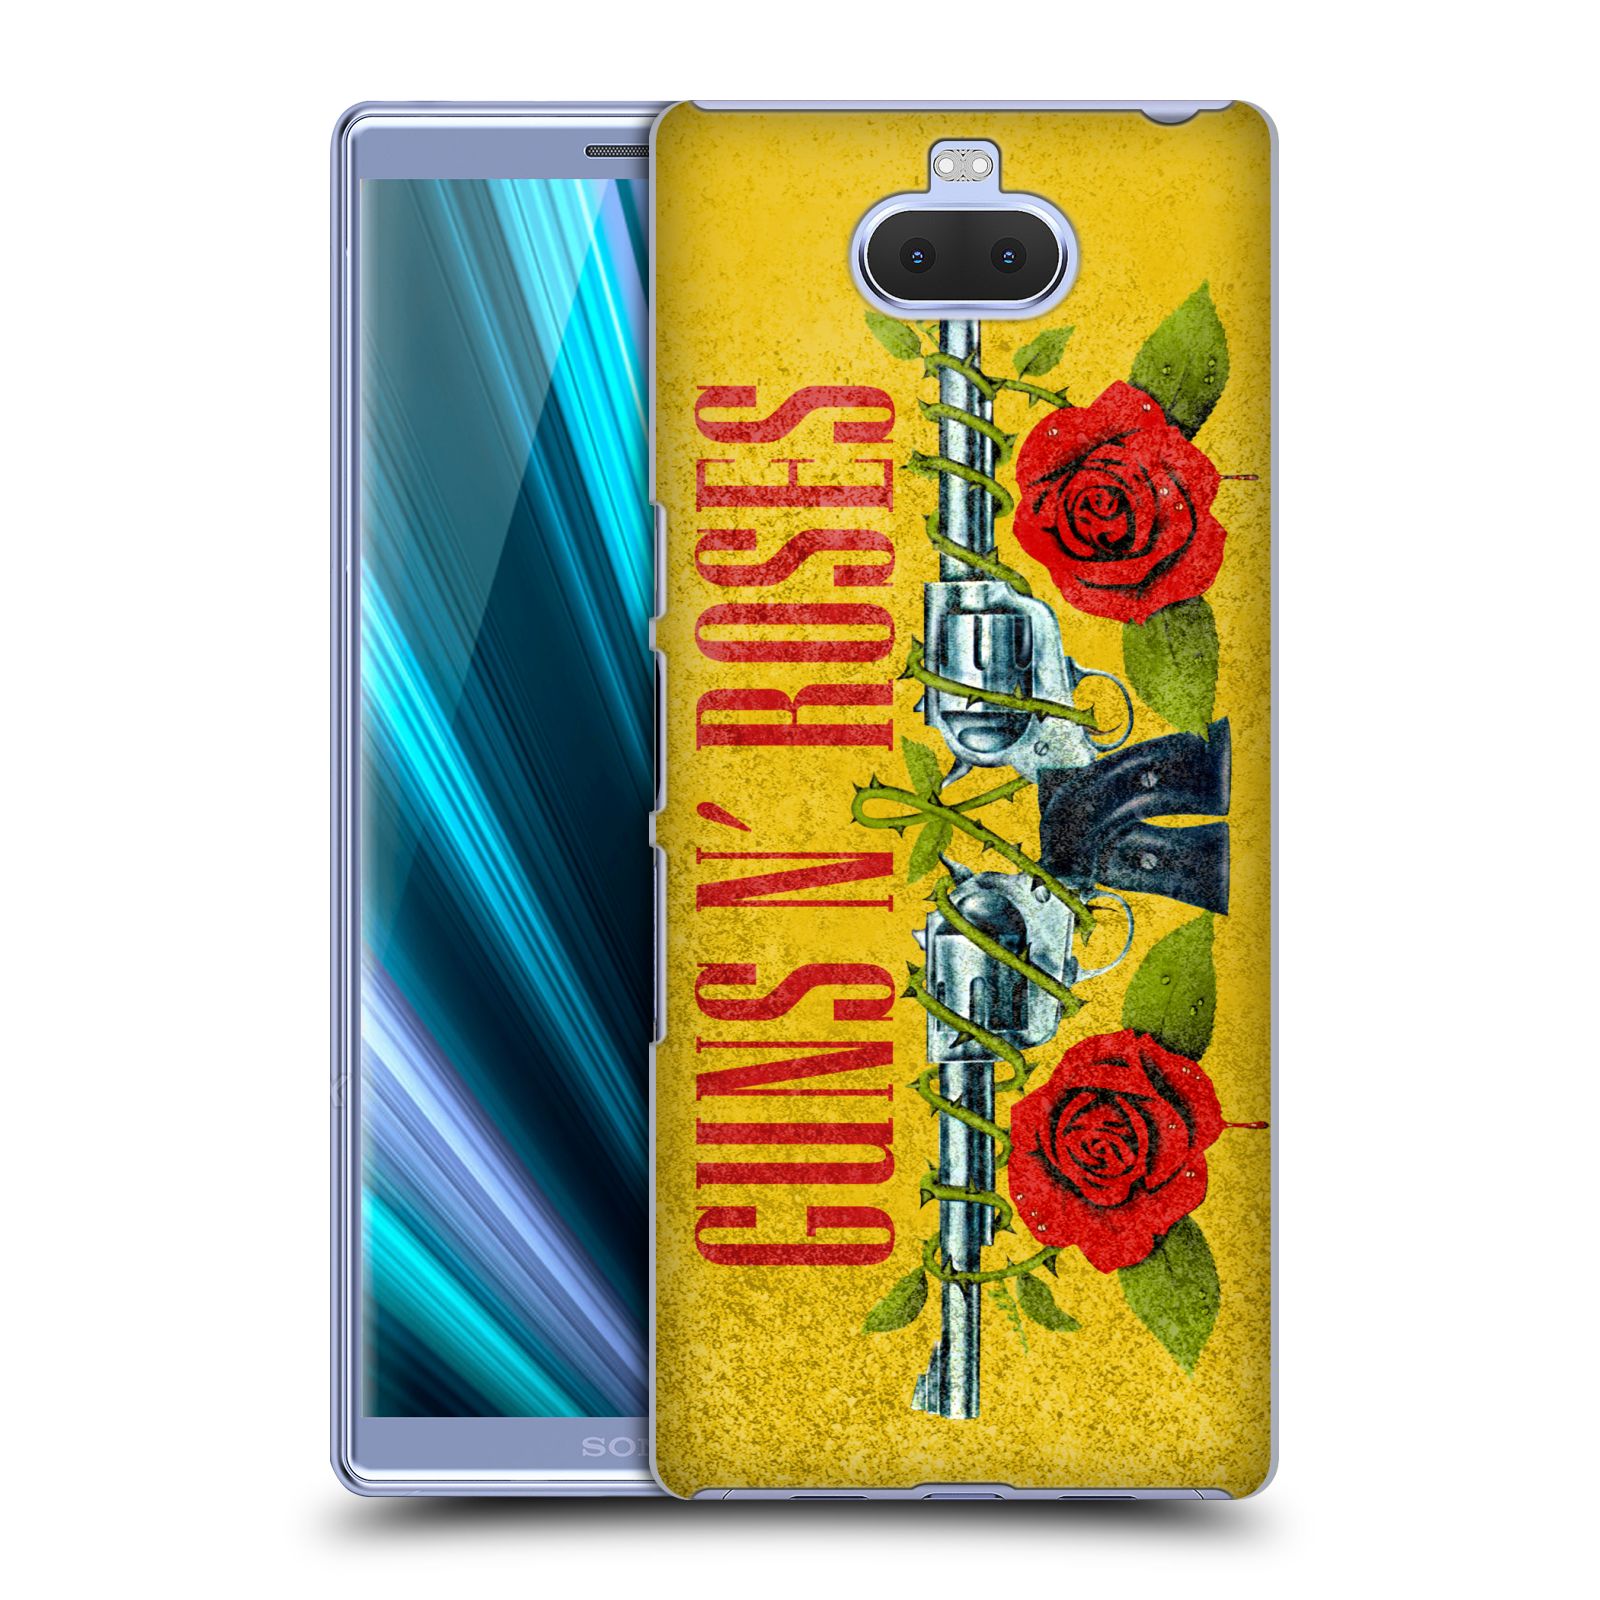 Pouzdro na mobil Sony Xperia 10 - Head Case - hudební skupina Guns N Roses pistole a růže žluté pozadí